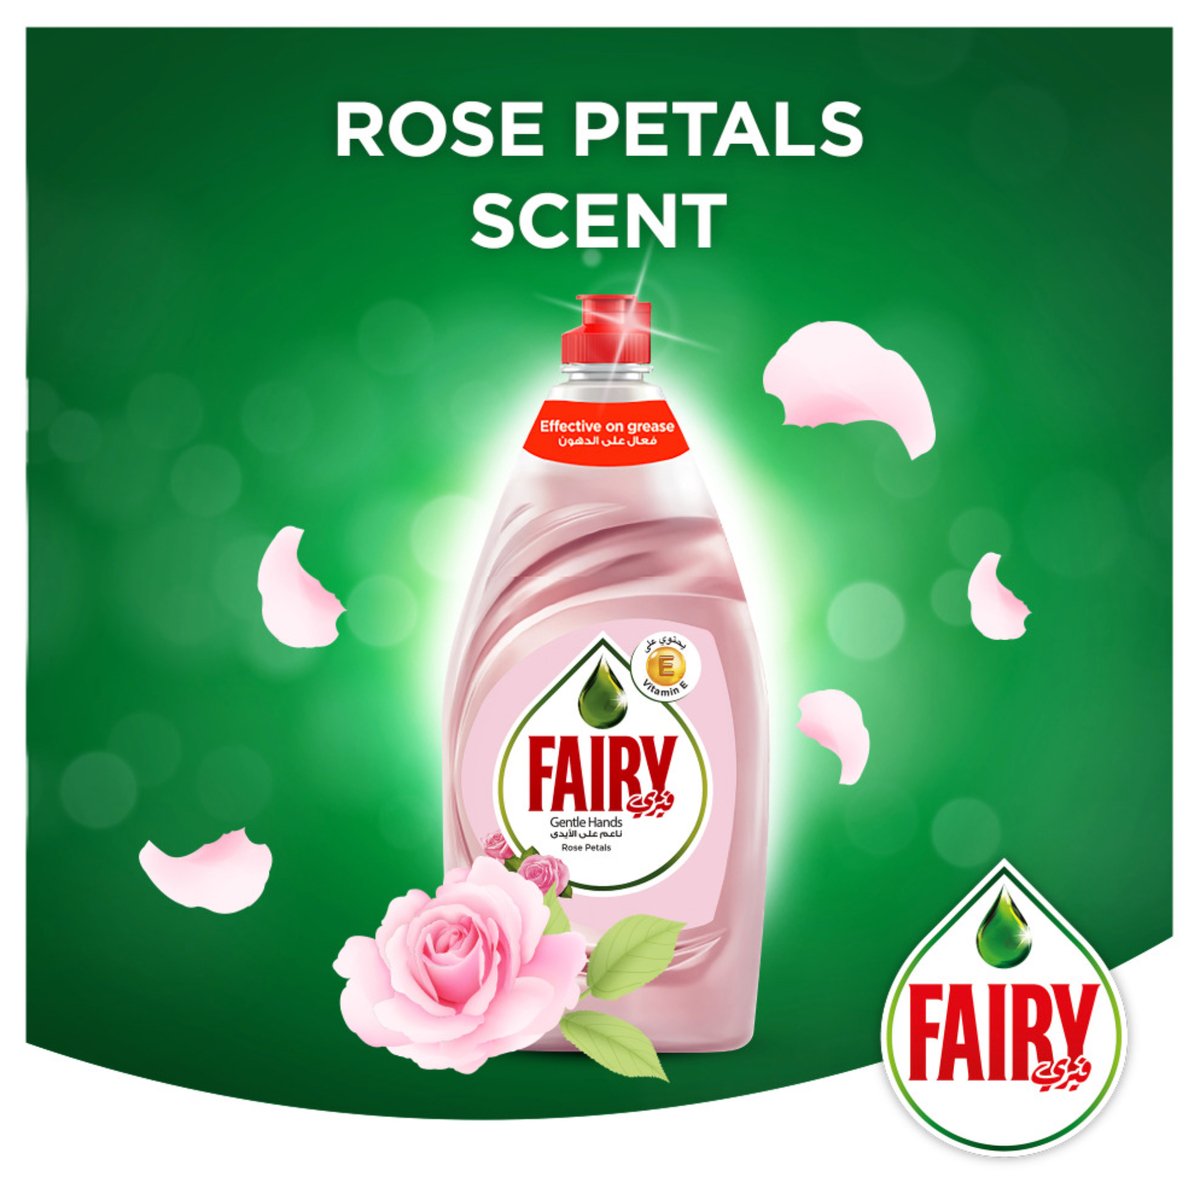 Fairy Gentle Hands Rose Petals Dishwashing Liquid Soap Value Pack 2 x 750 ml